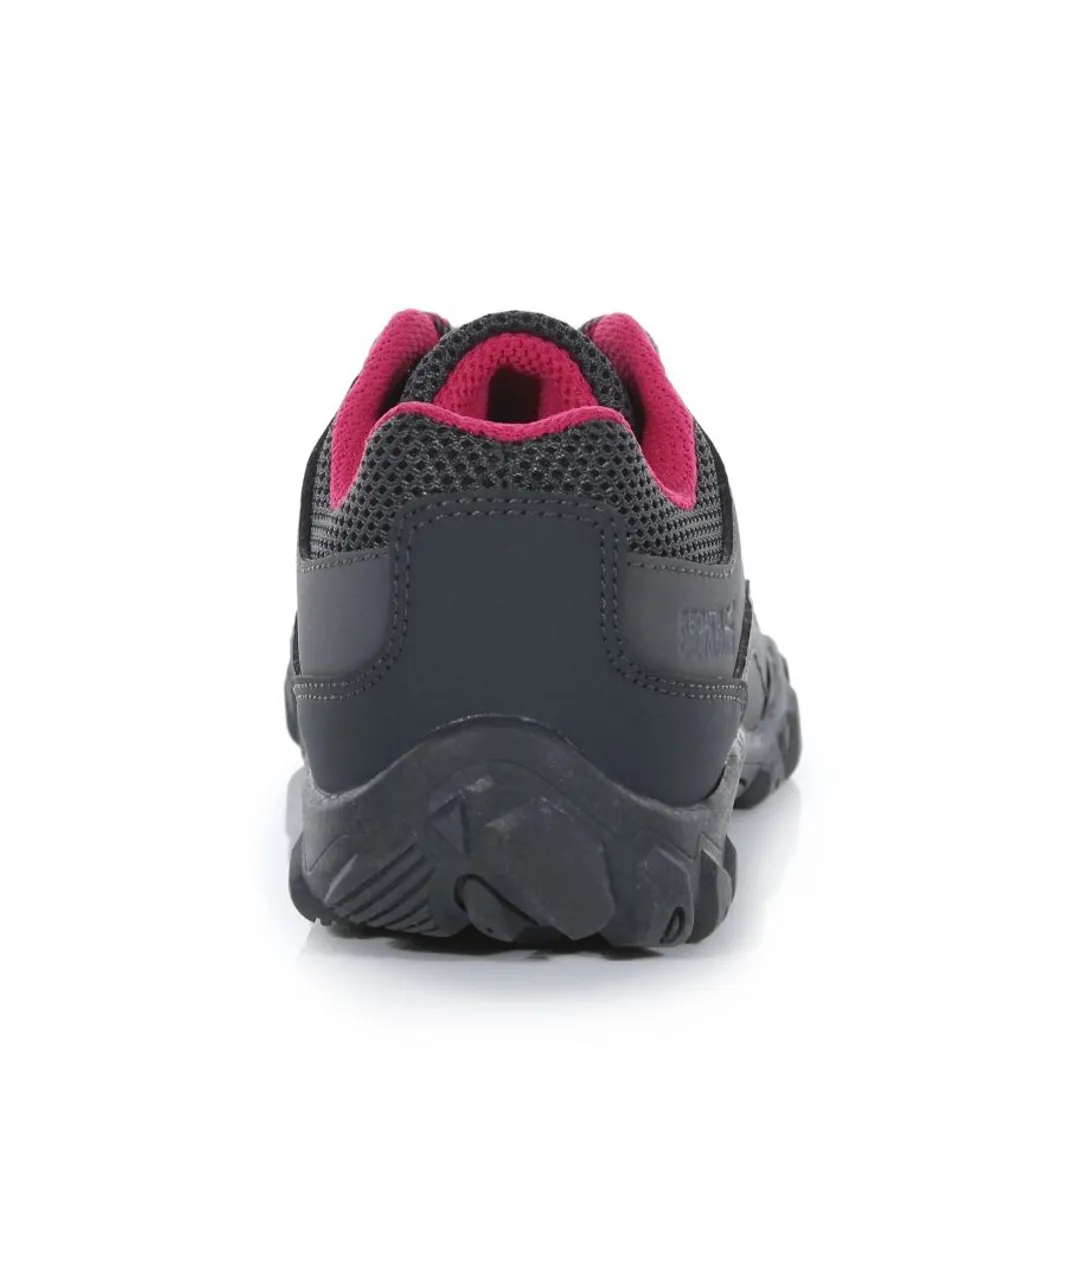 Regatta Childrens Unisex Childrens/Kids Edgepoint Waterproof Walking Shoes (Steel/Pink Fusion) - Grey